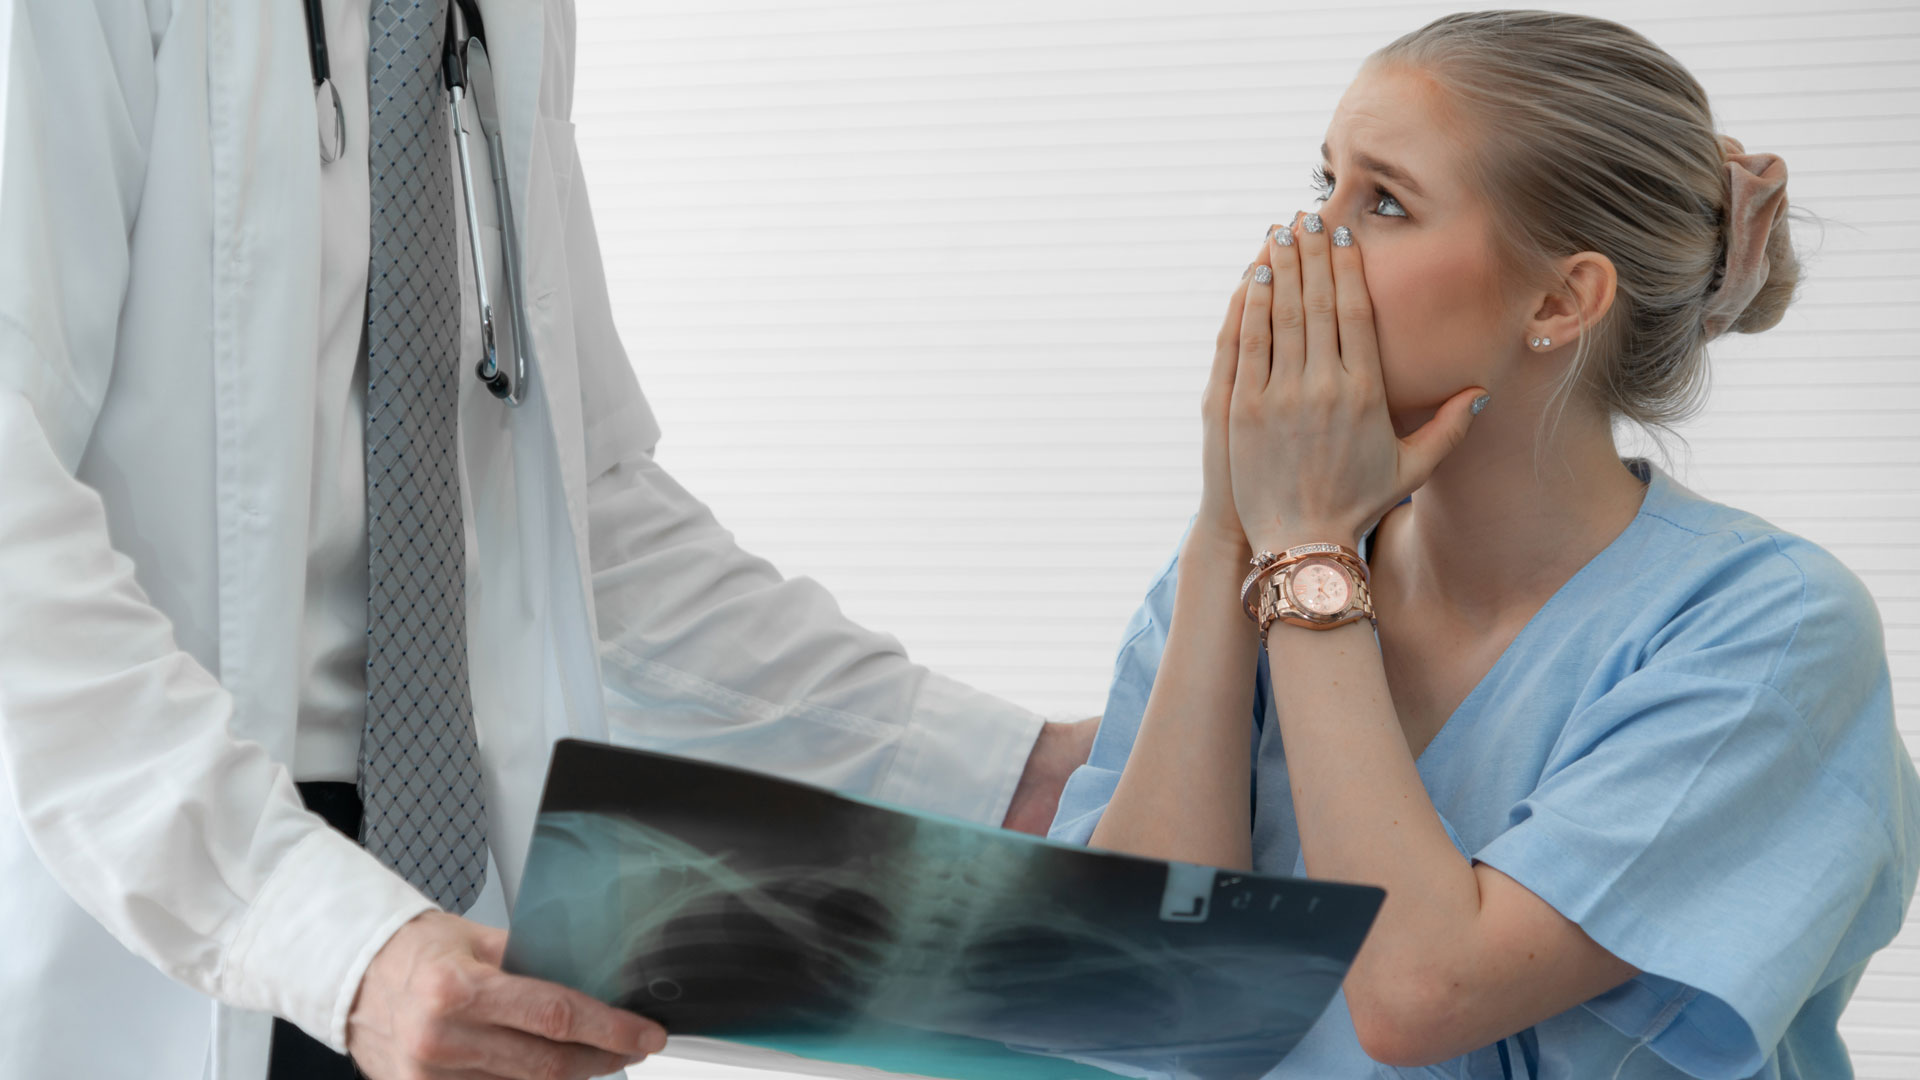 Woman receiving bad diagnosis